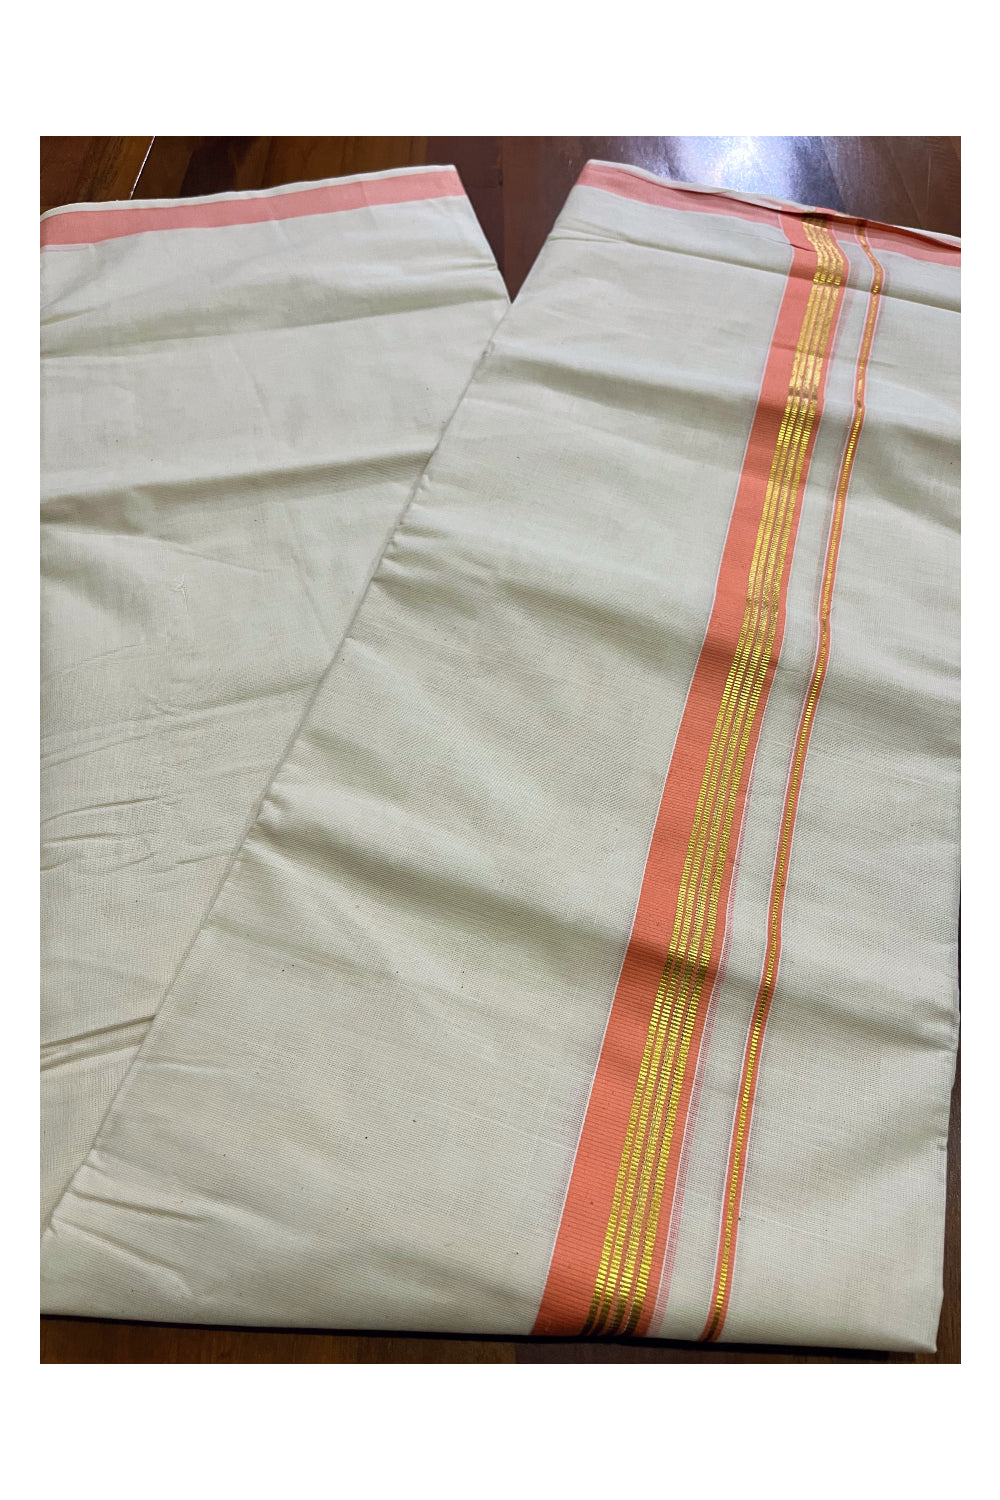 Off White Kerala Cotton Double Mundu with Kasavu and Peach Border (South Indian Kerala Dhoti)